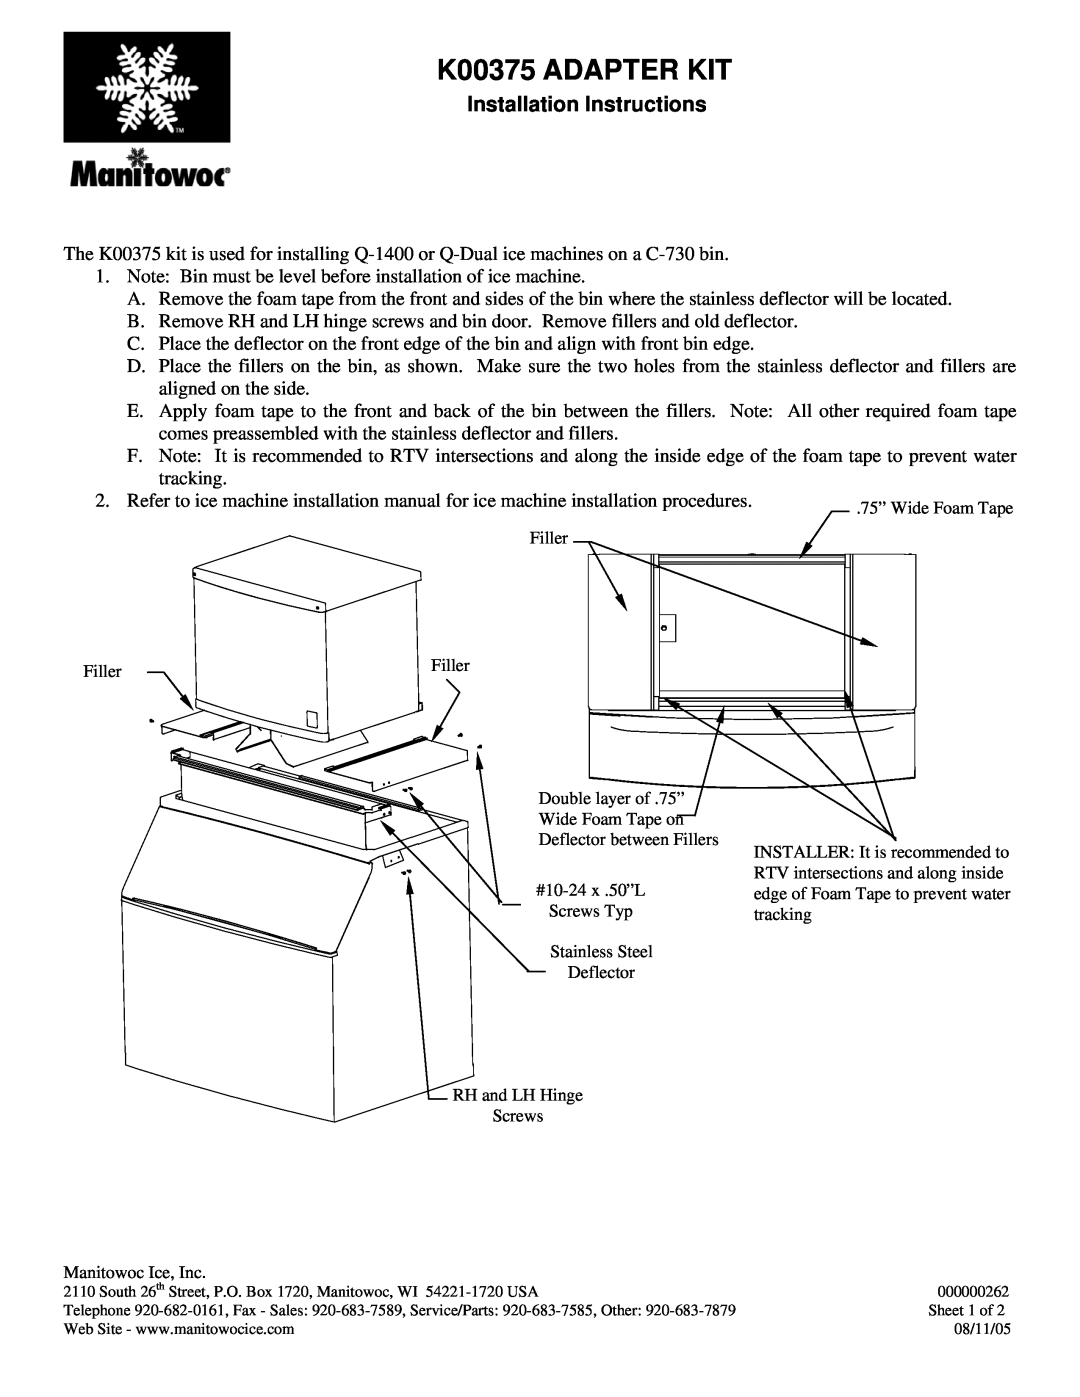 Manitowoc Ice installation instructions K00375 ADAPTER KIT, Installation Instructions 